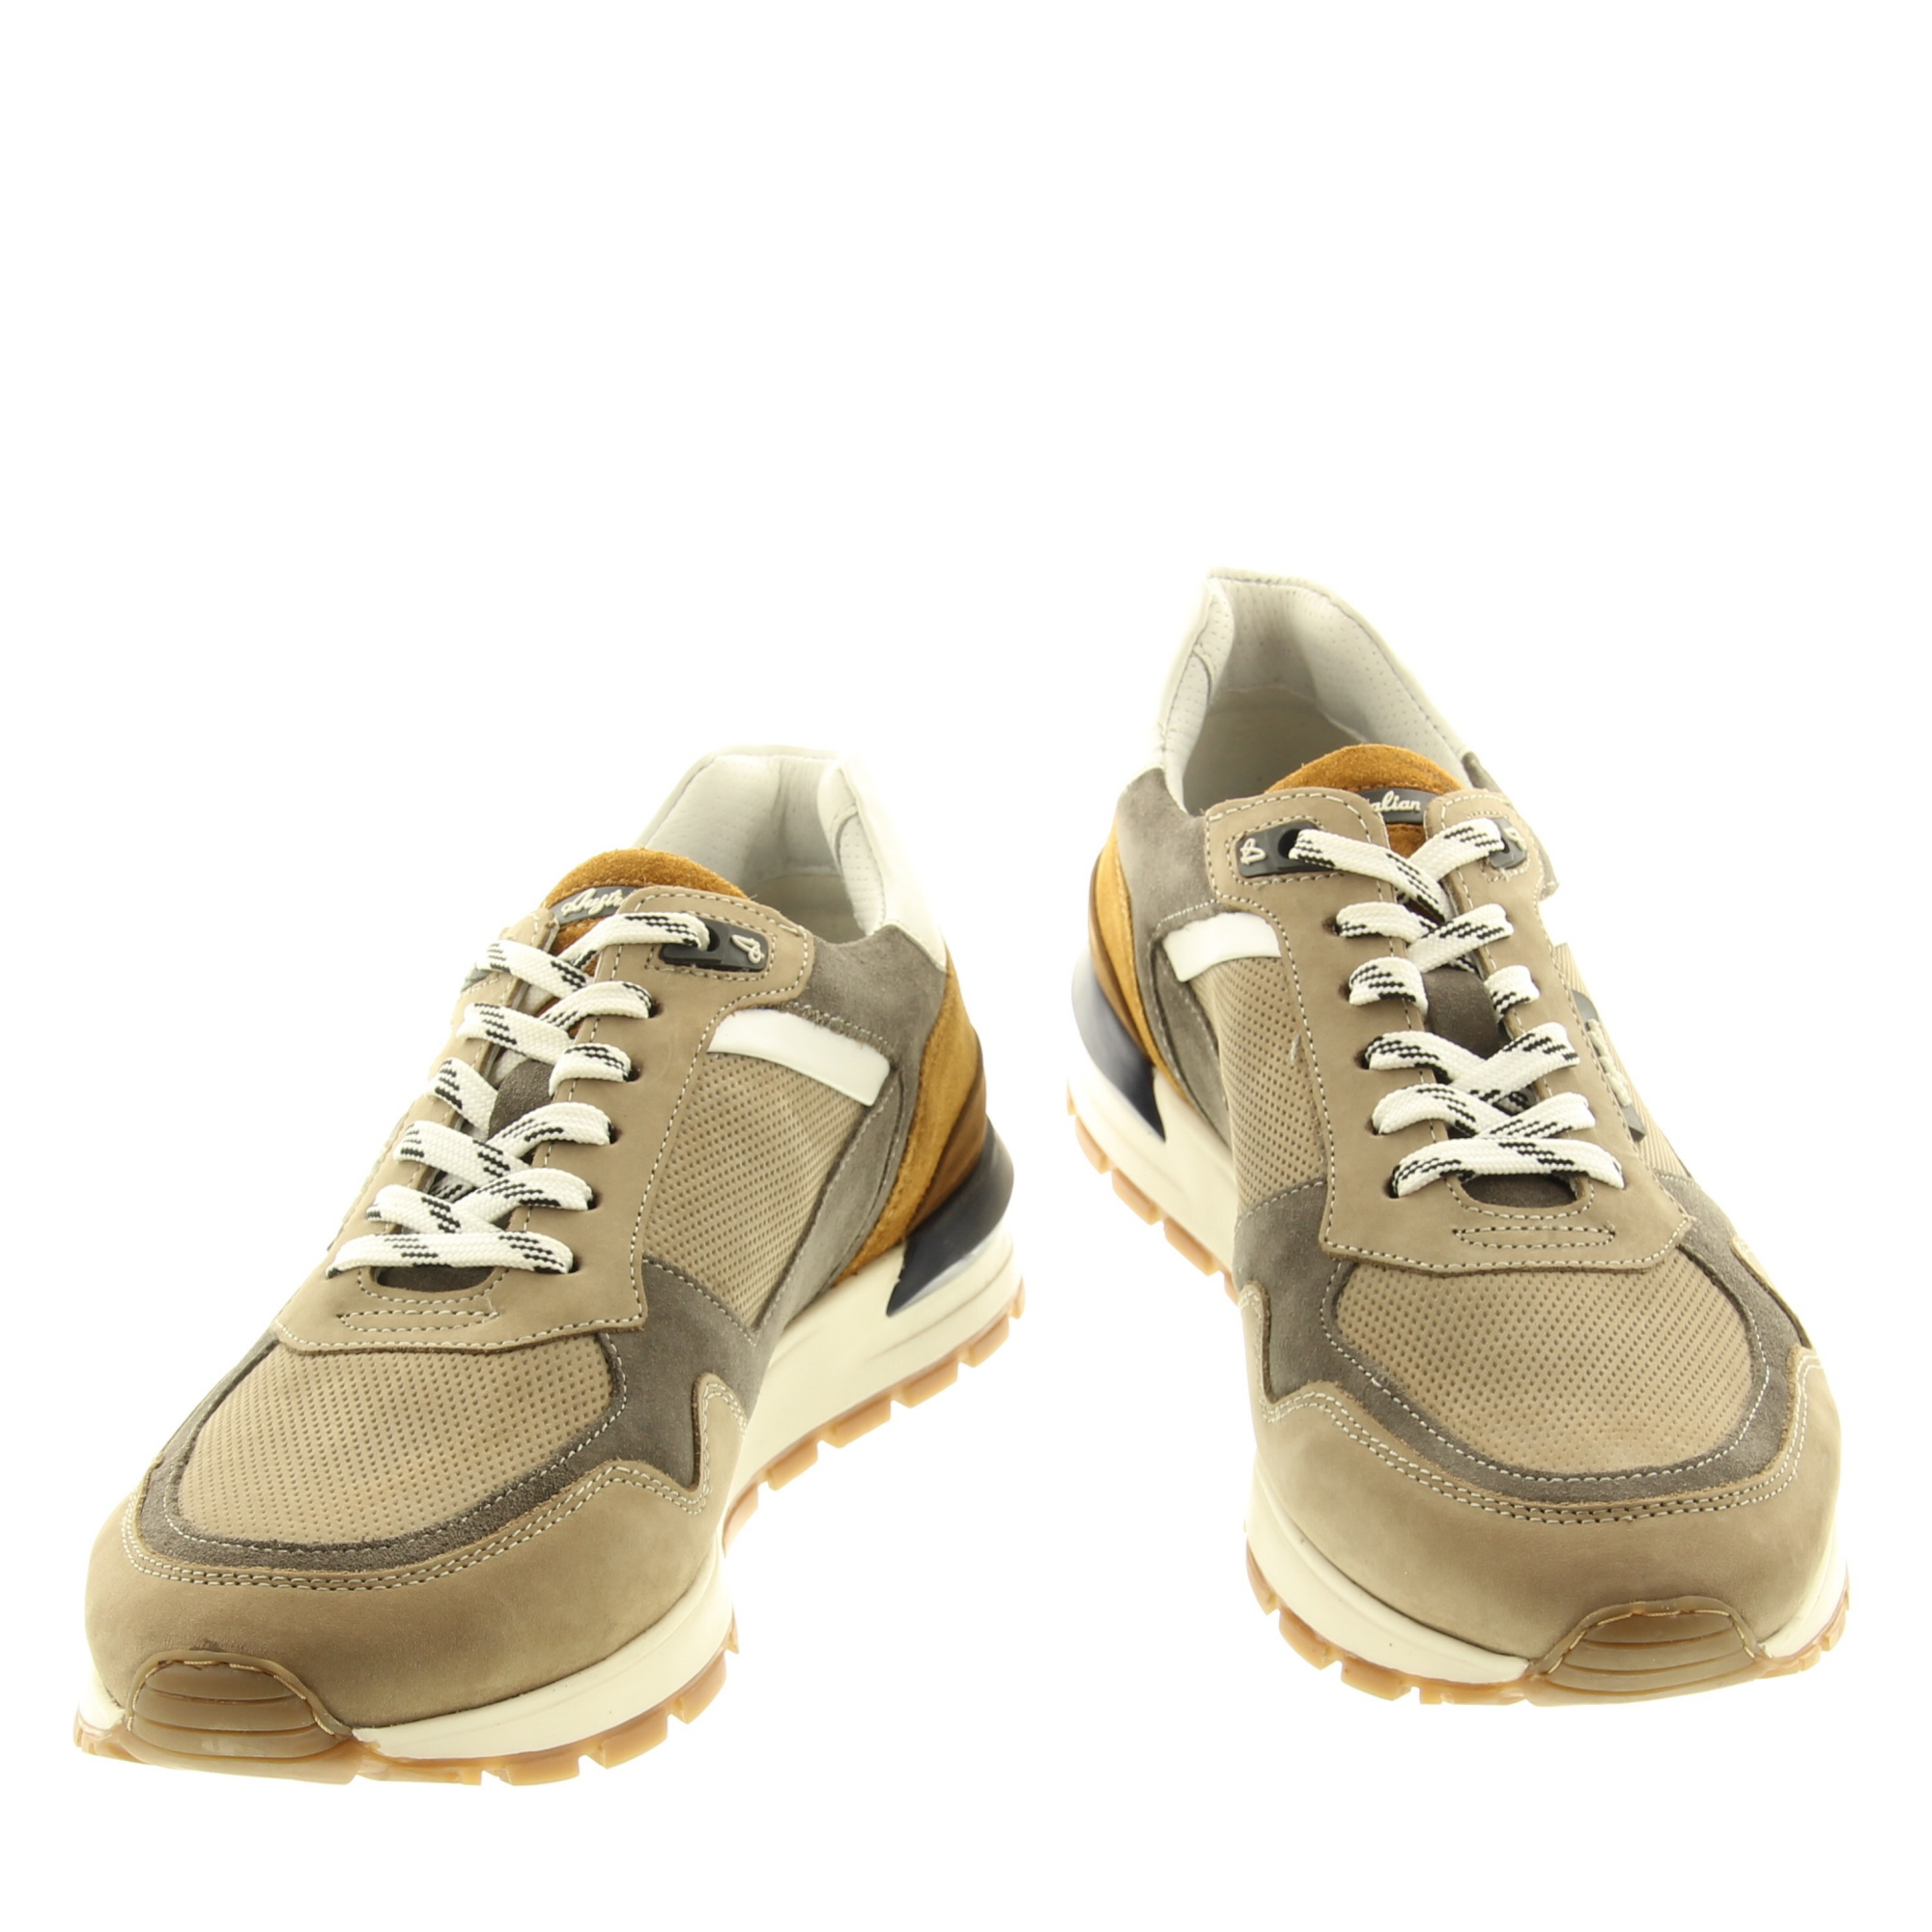 Australian Footwear Novecento 15.1632.02 KI0 Grey-Cognac-White